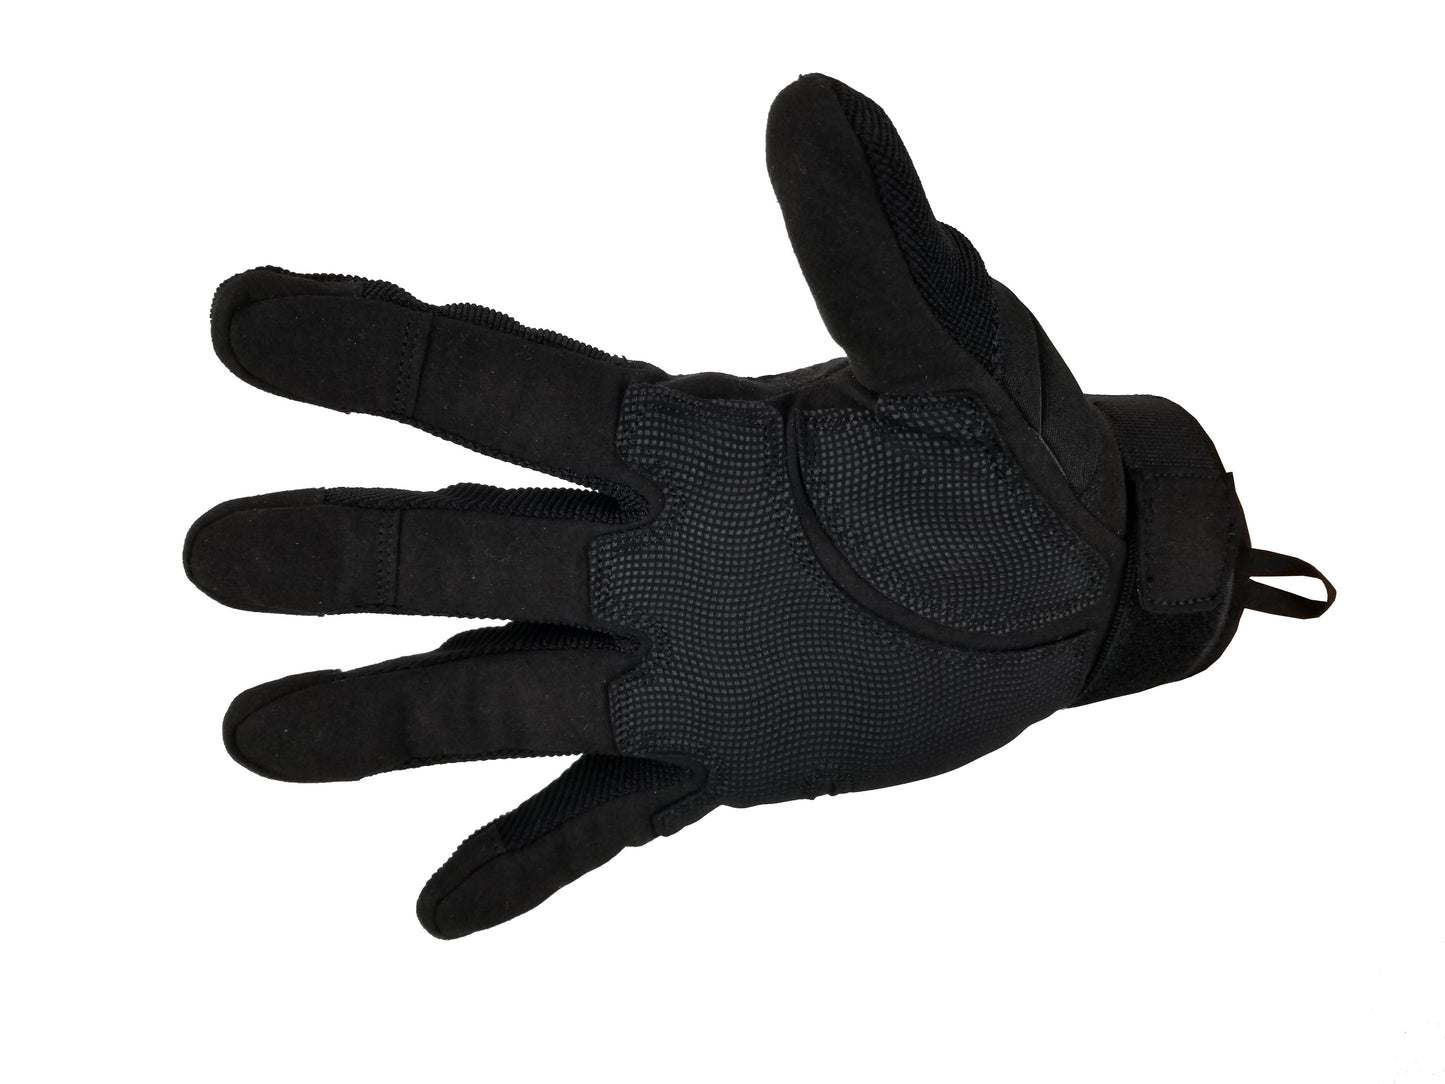 Hard Knuckle Tactical Glove